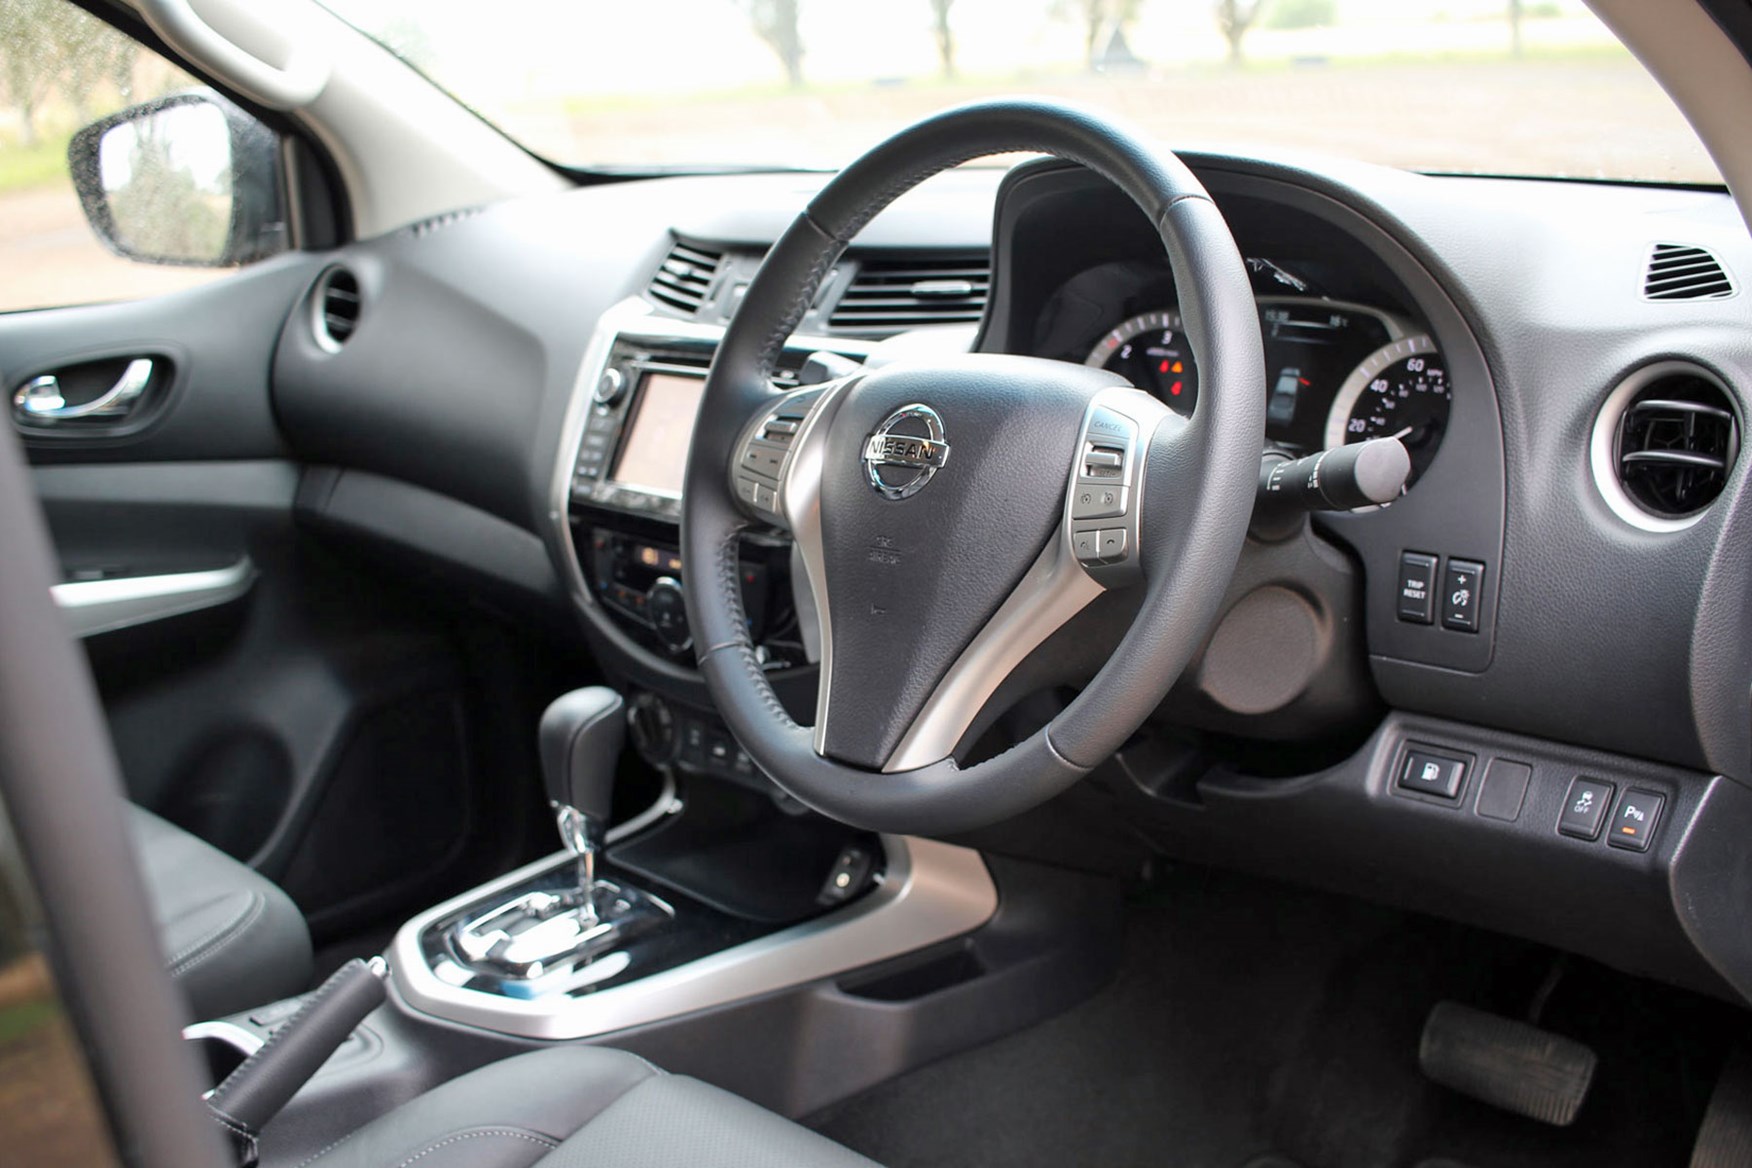 Nissan Navara Trek-1 review - cab interior, steering wheel, dashboard